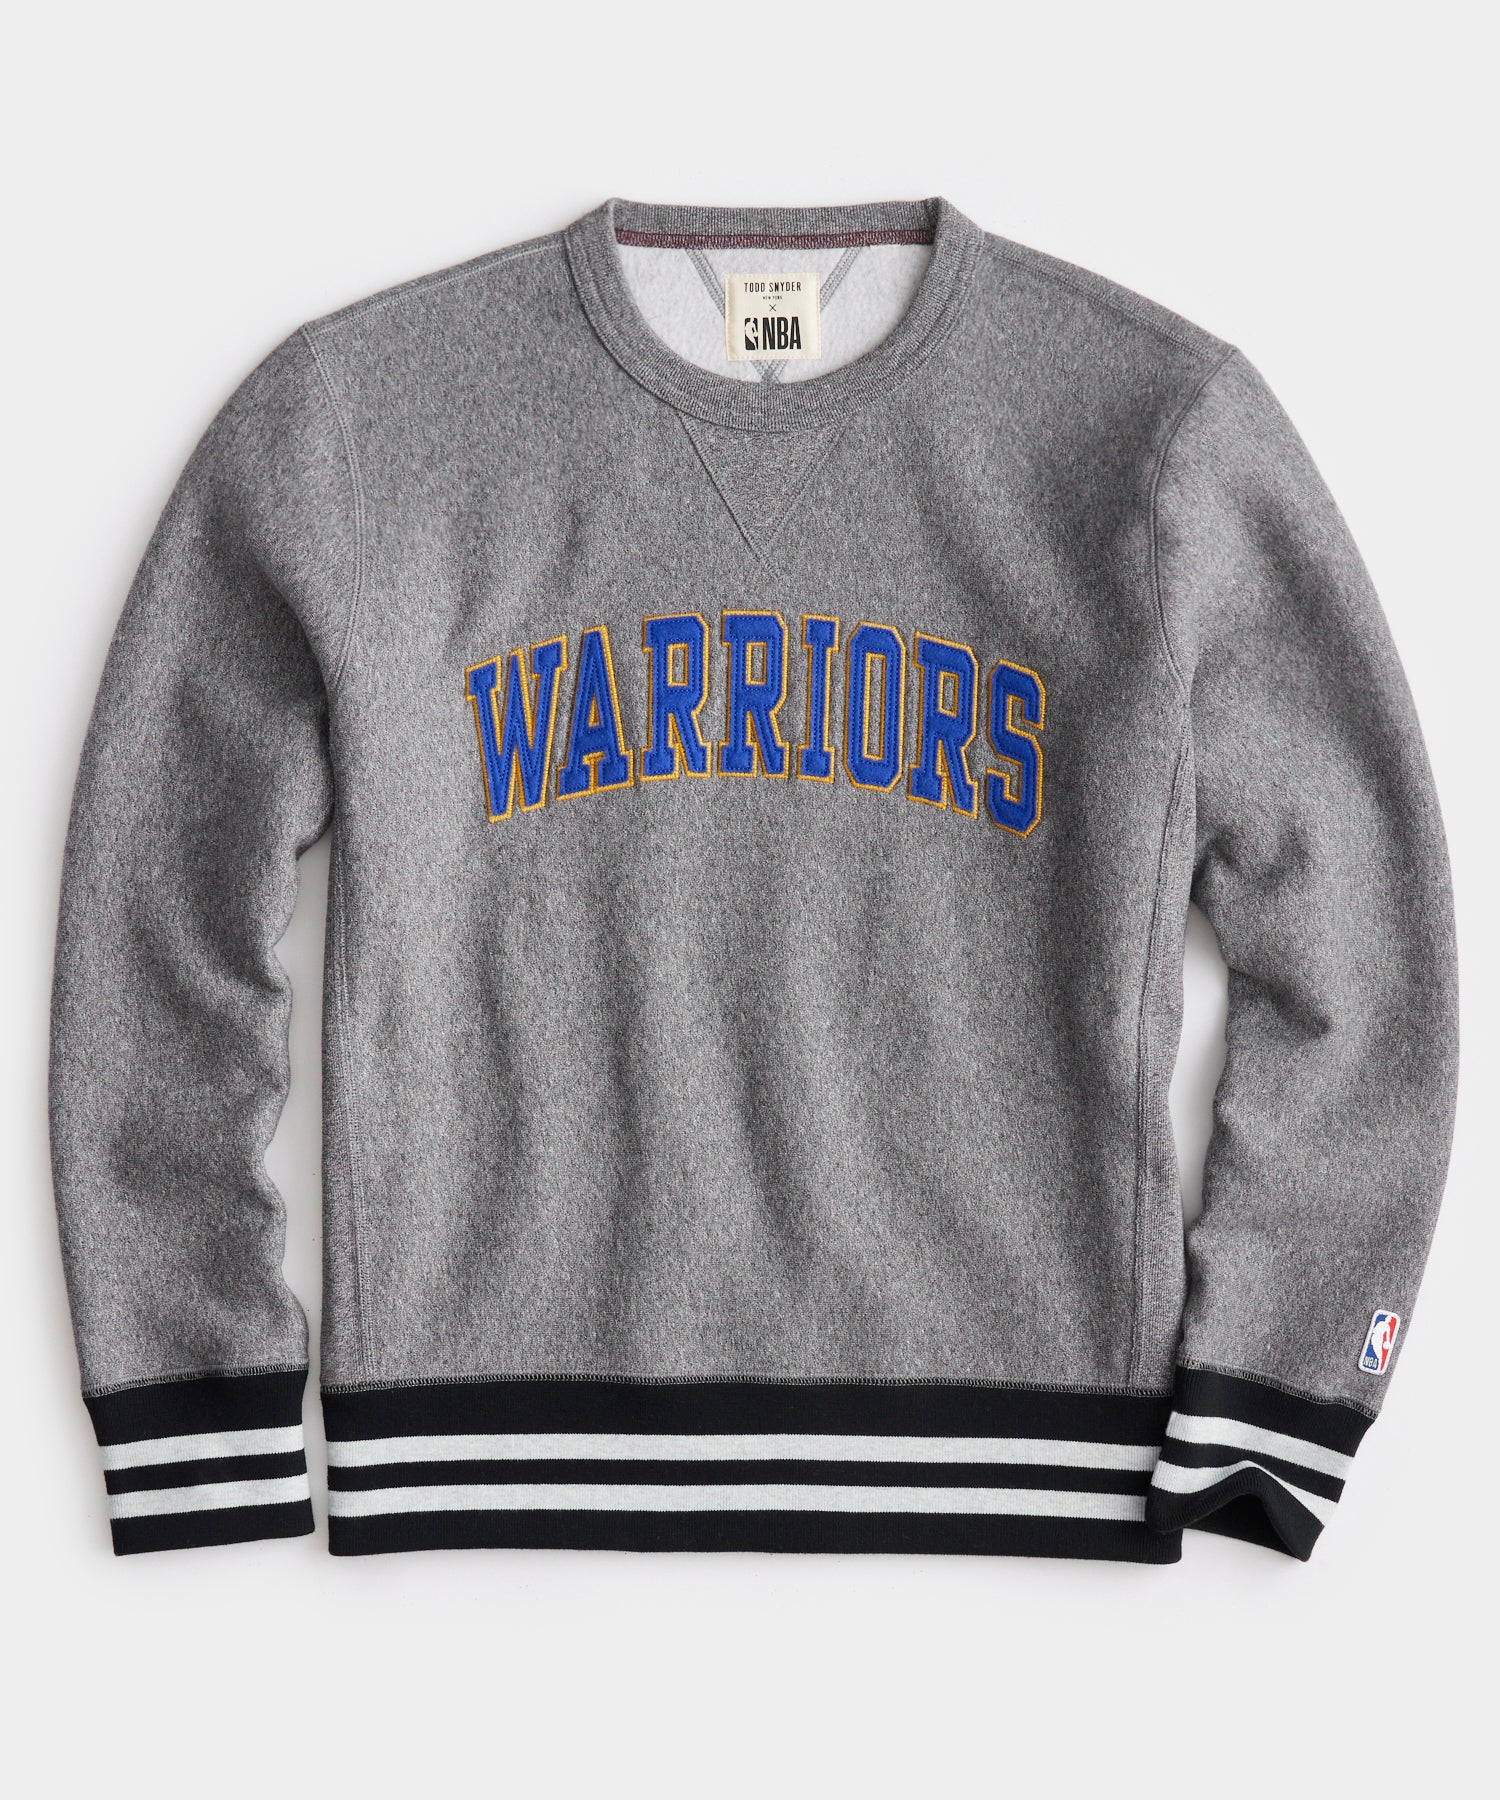 Golden State Warriors T-Shirts in Golden State Warriors Team Shop 